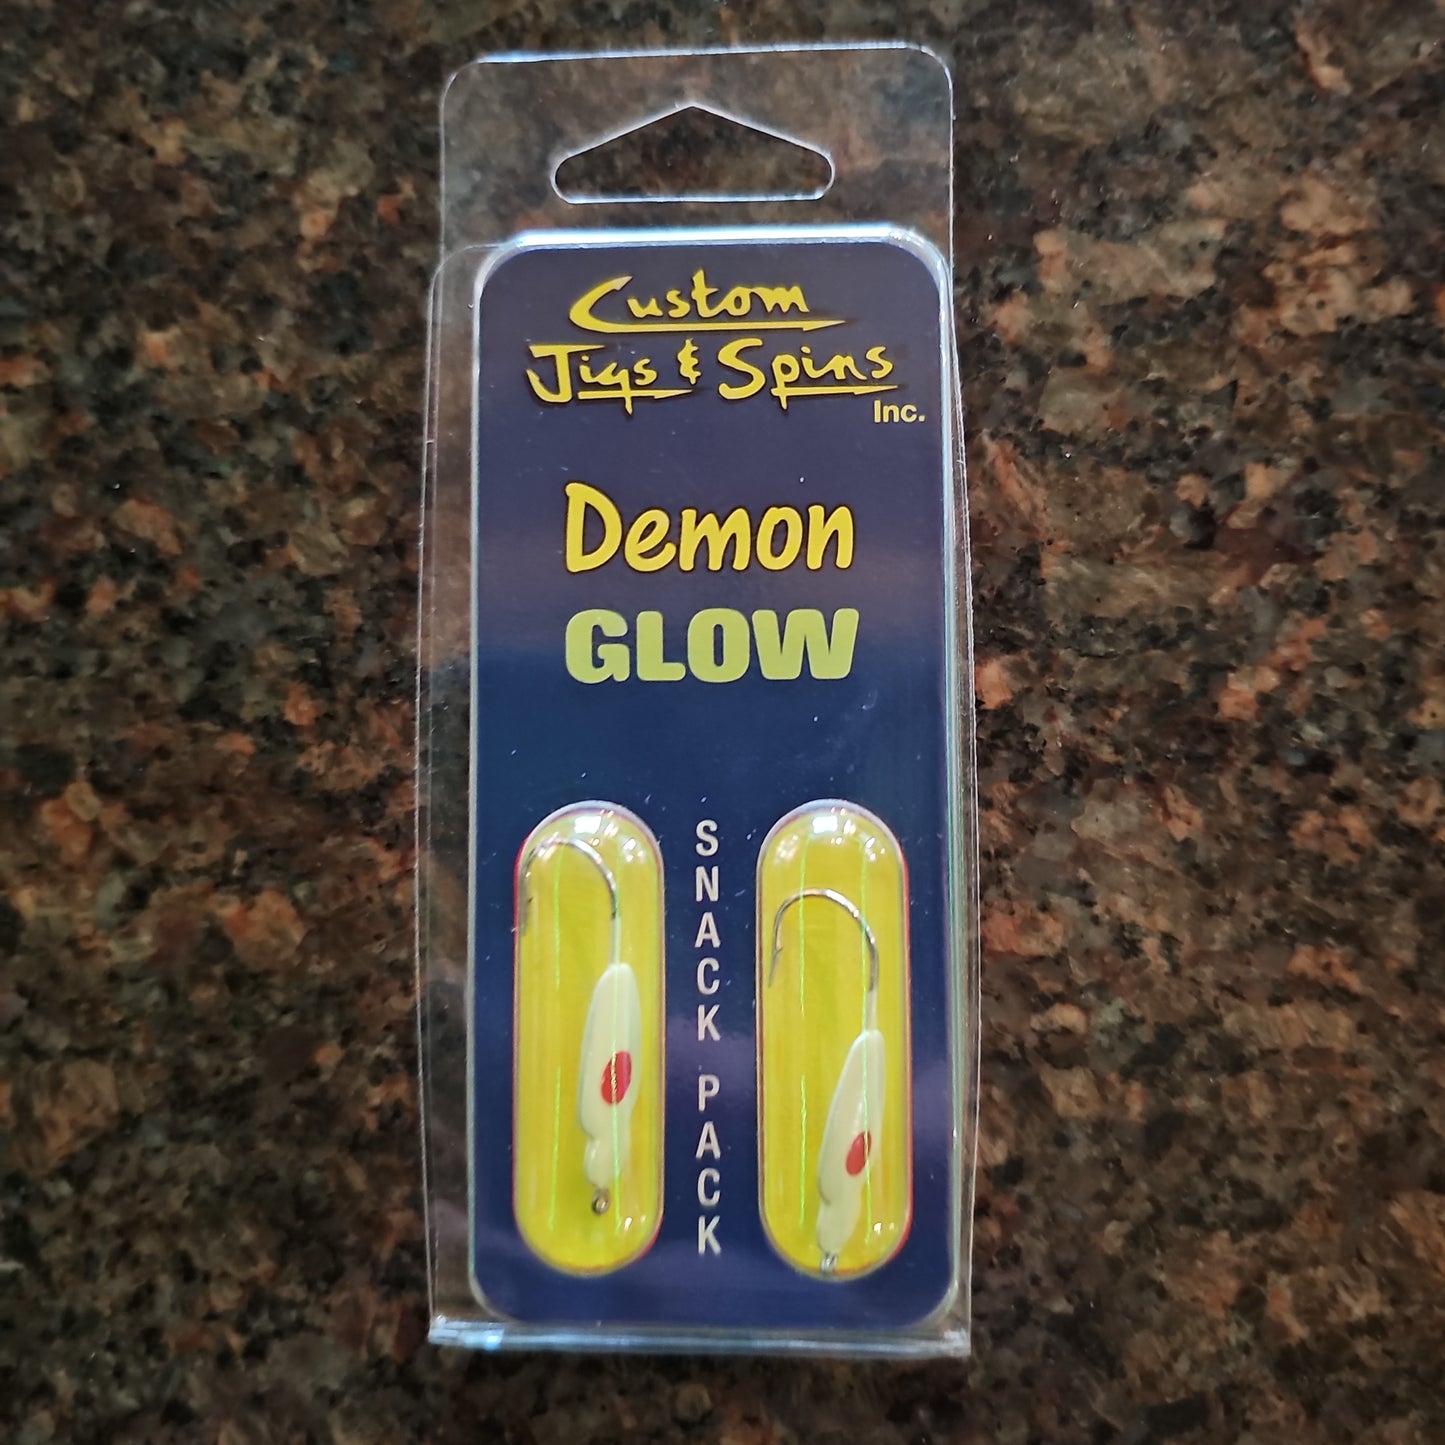 Custom Jigs & Spins Demon Glow